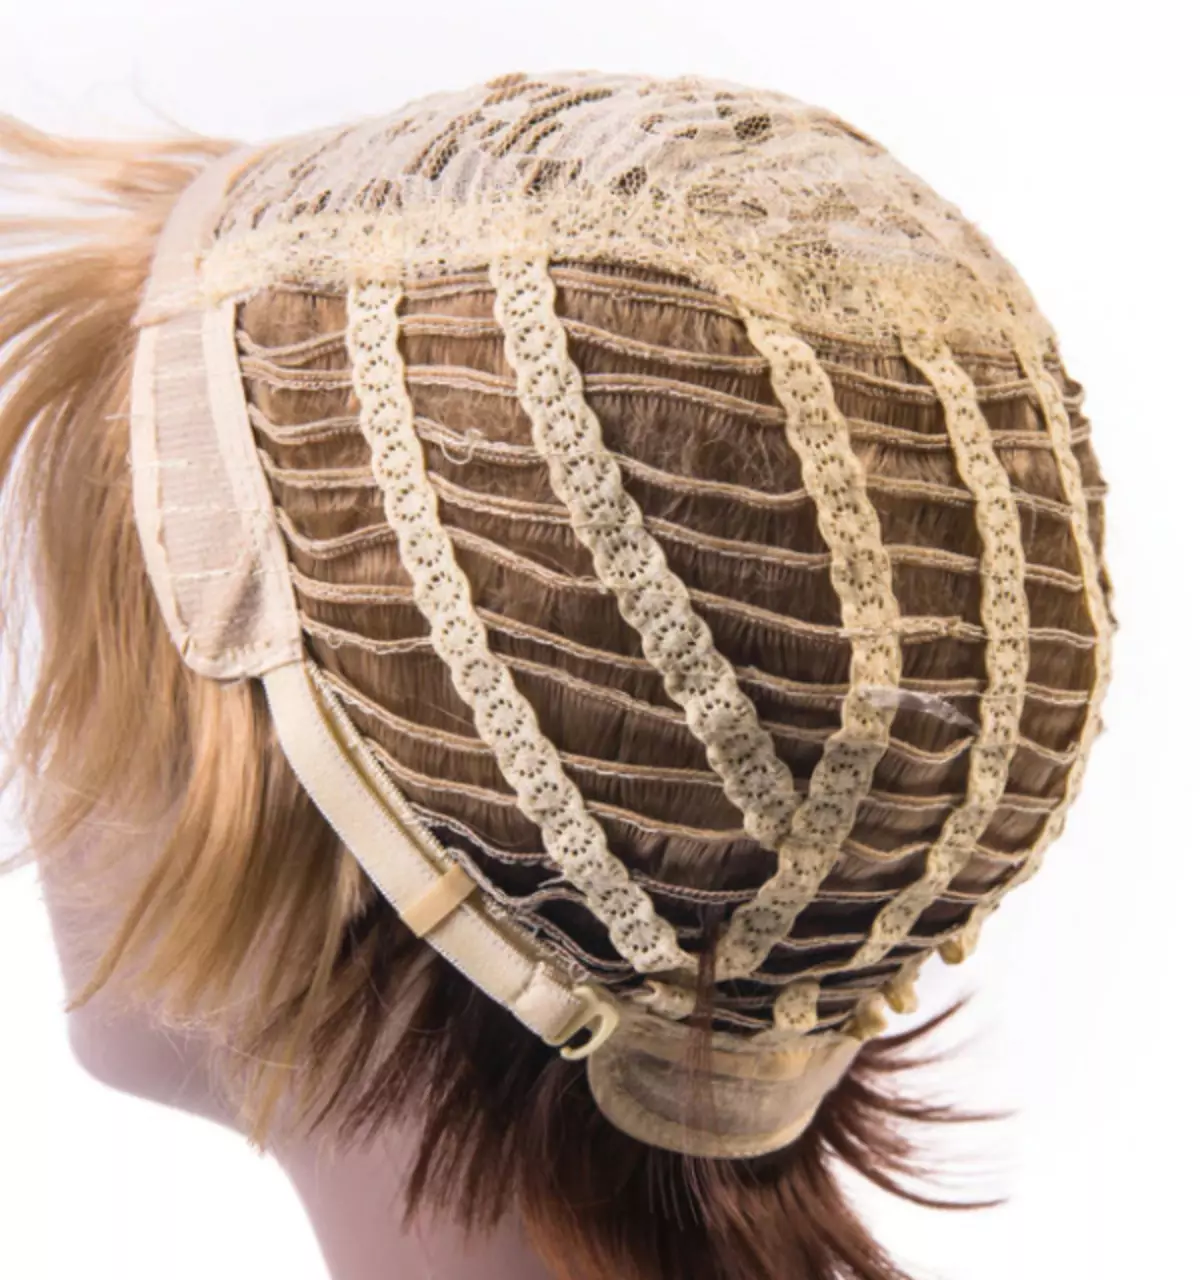 Wigs (67 ফটো): দীর্ঘ ও স্বল্প মেয়াদী চুল জন্য মহিলা মডেল। কারা, আফ্রো এবং চৌকো করে কাটা সংক্ষিপ্ত বিবরণ। কিভাবে বেছে পরিধান এবং যত্ন নিতে হয়? 16715_34